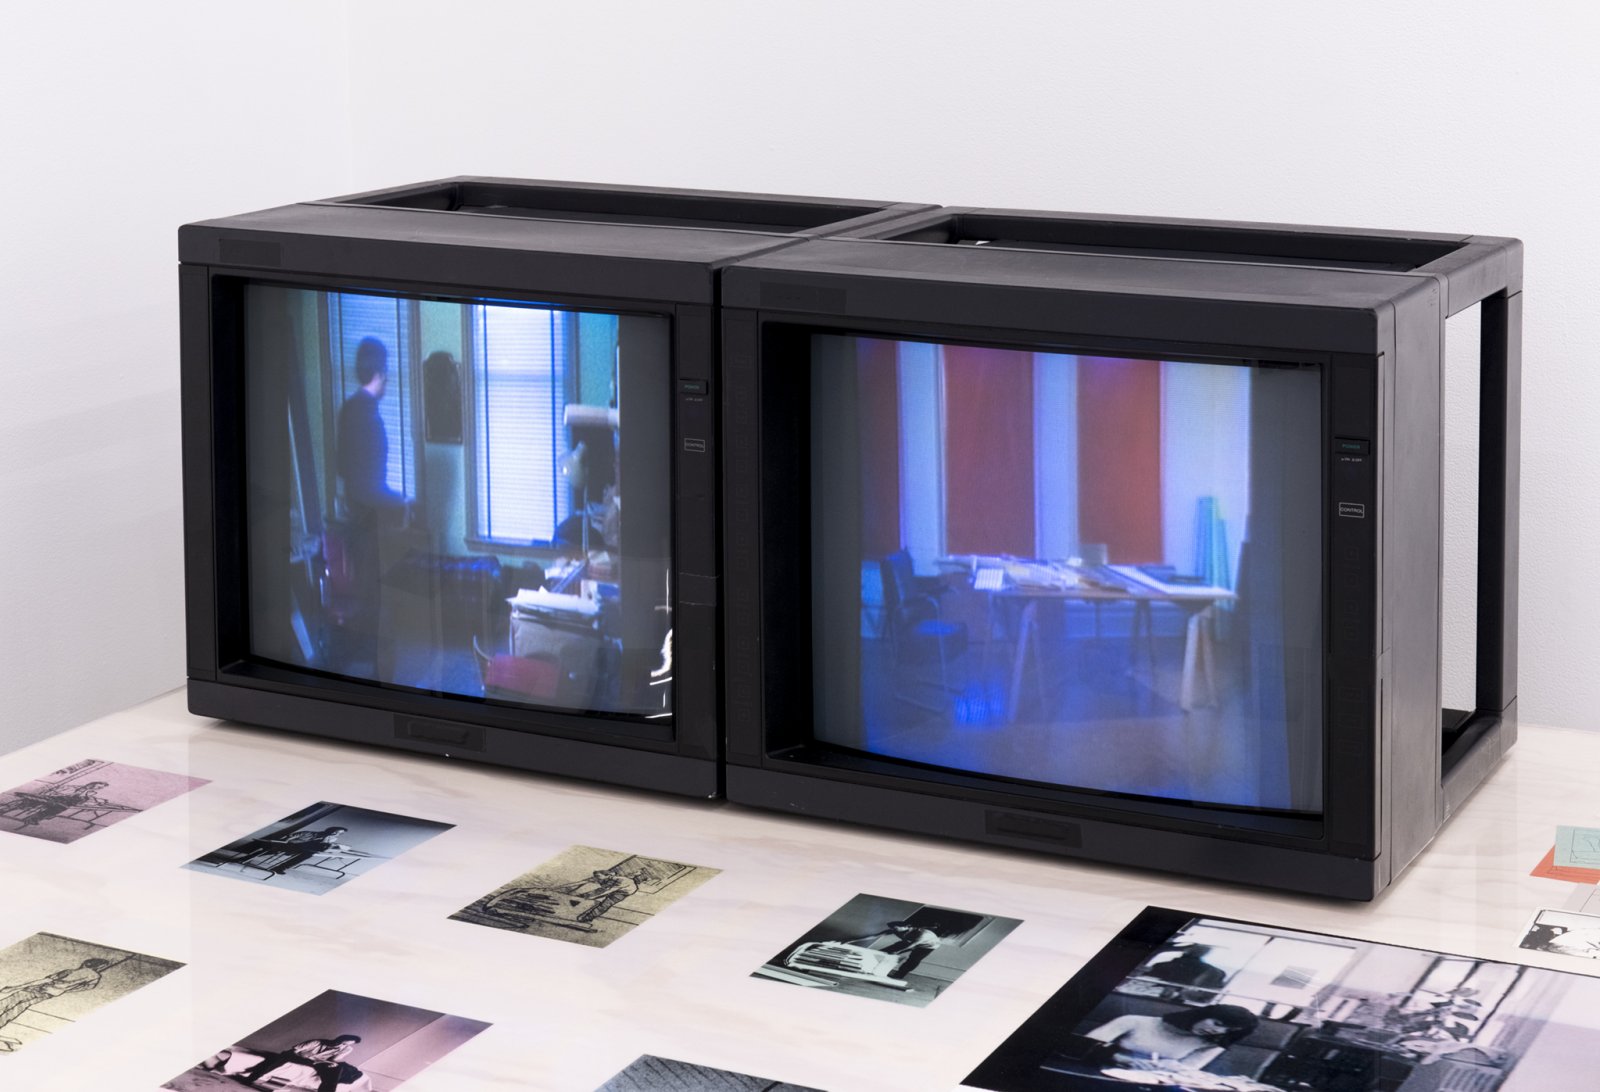 Ian Wallace, Studio Work, 1979, 2 channel video, 3/4 inch video transferred to DVD